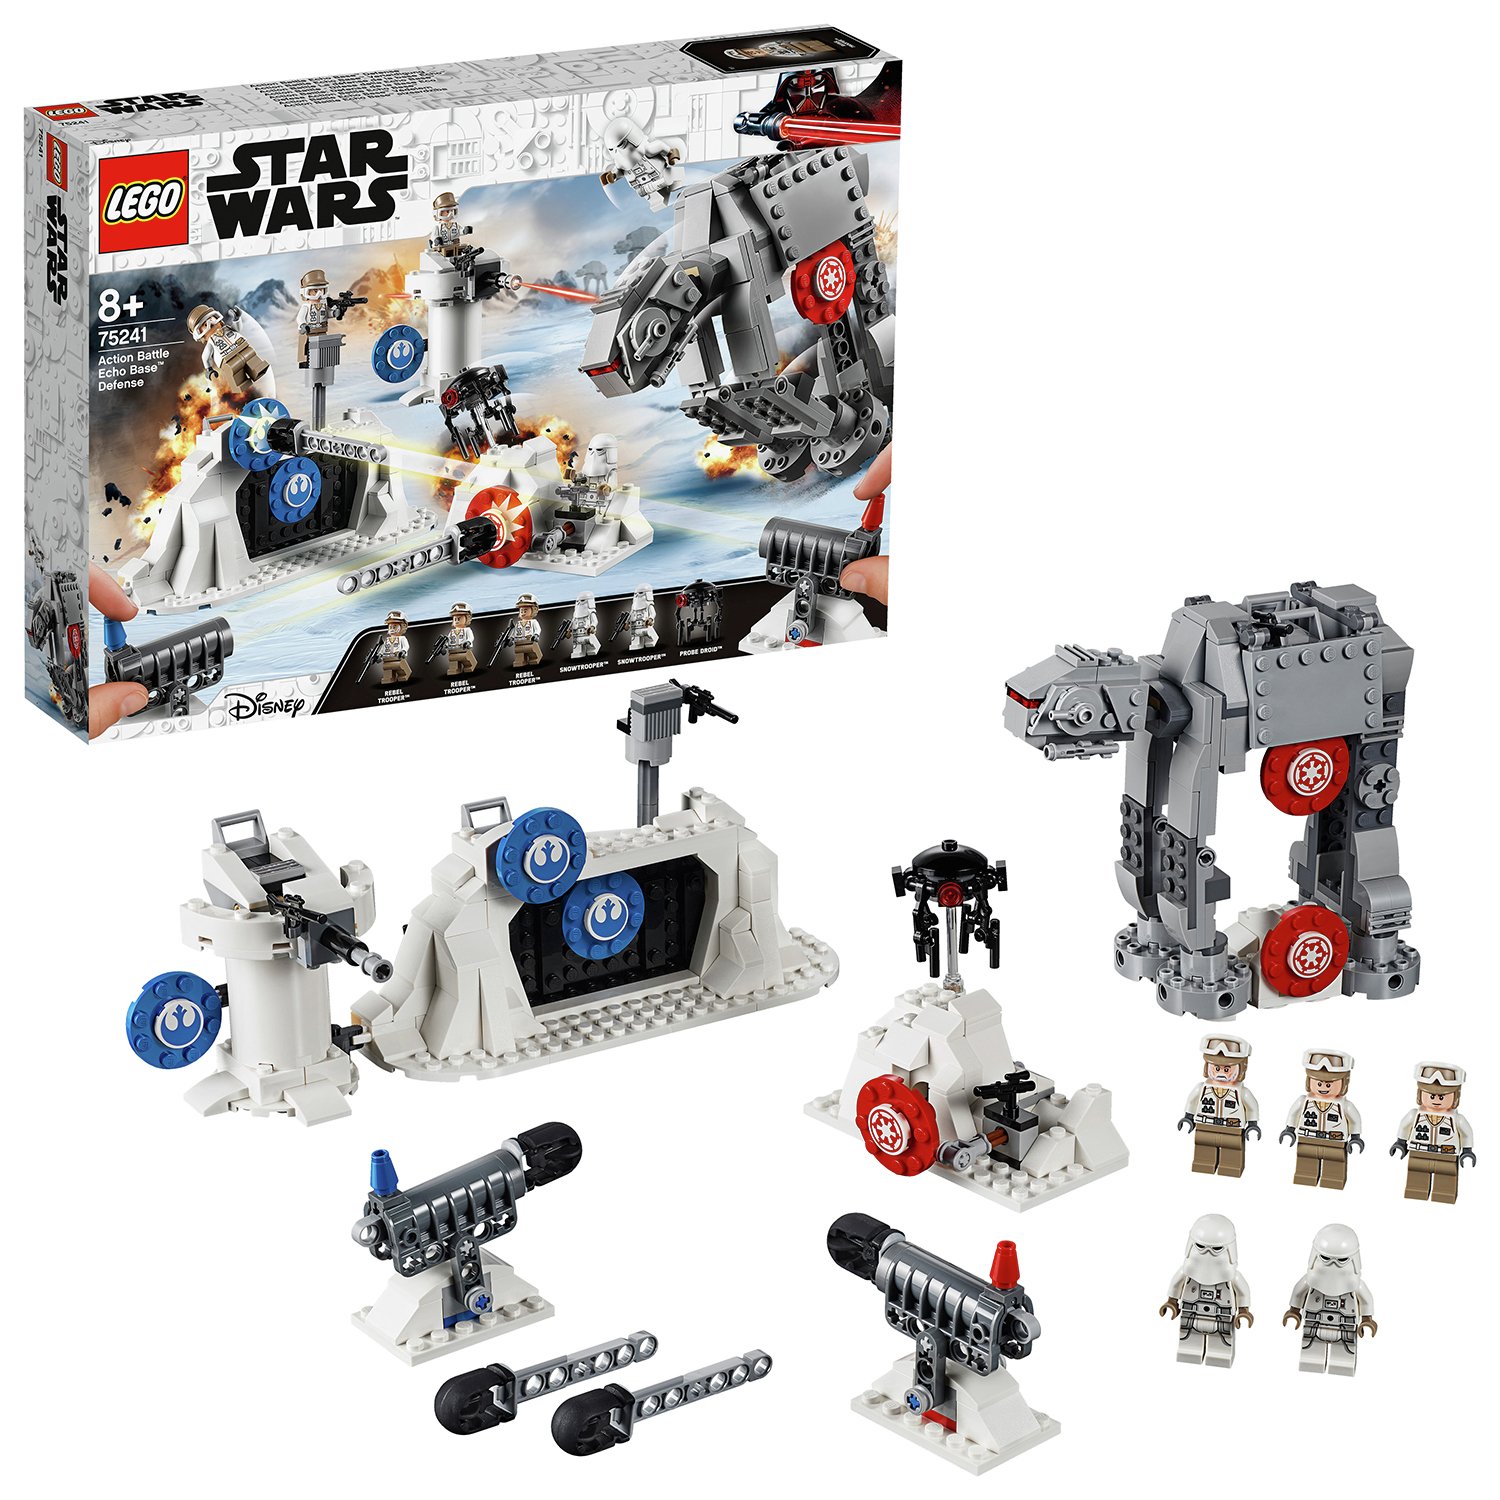 LEGO Star Wars The Empire Strikes Back Battle Set - 75241